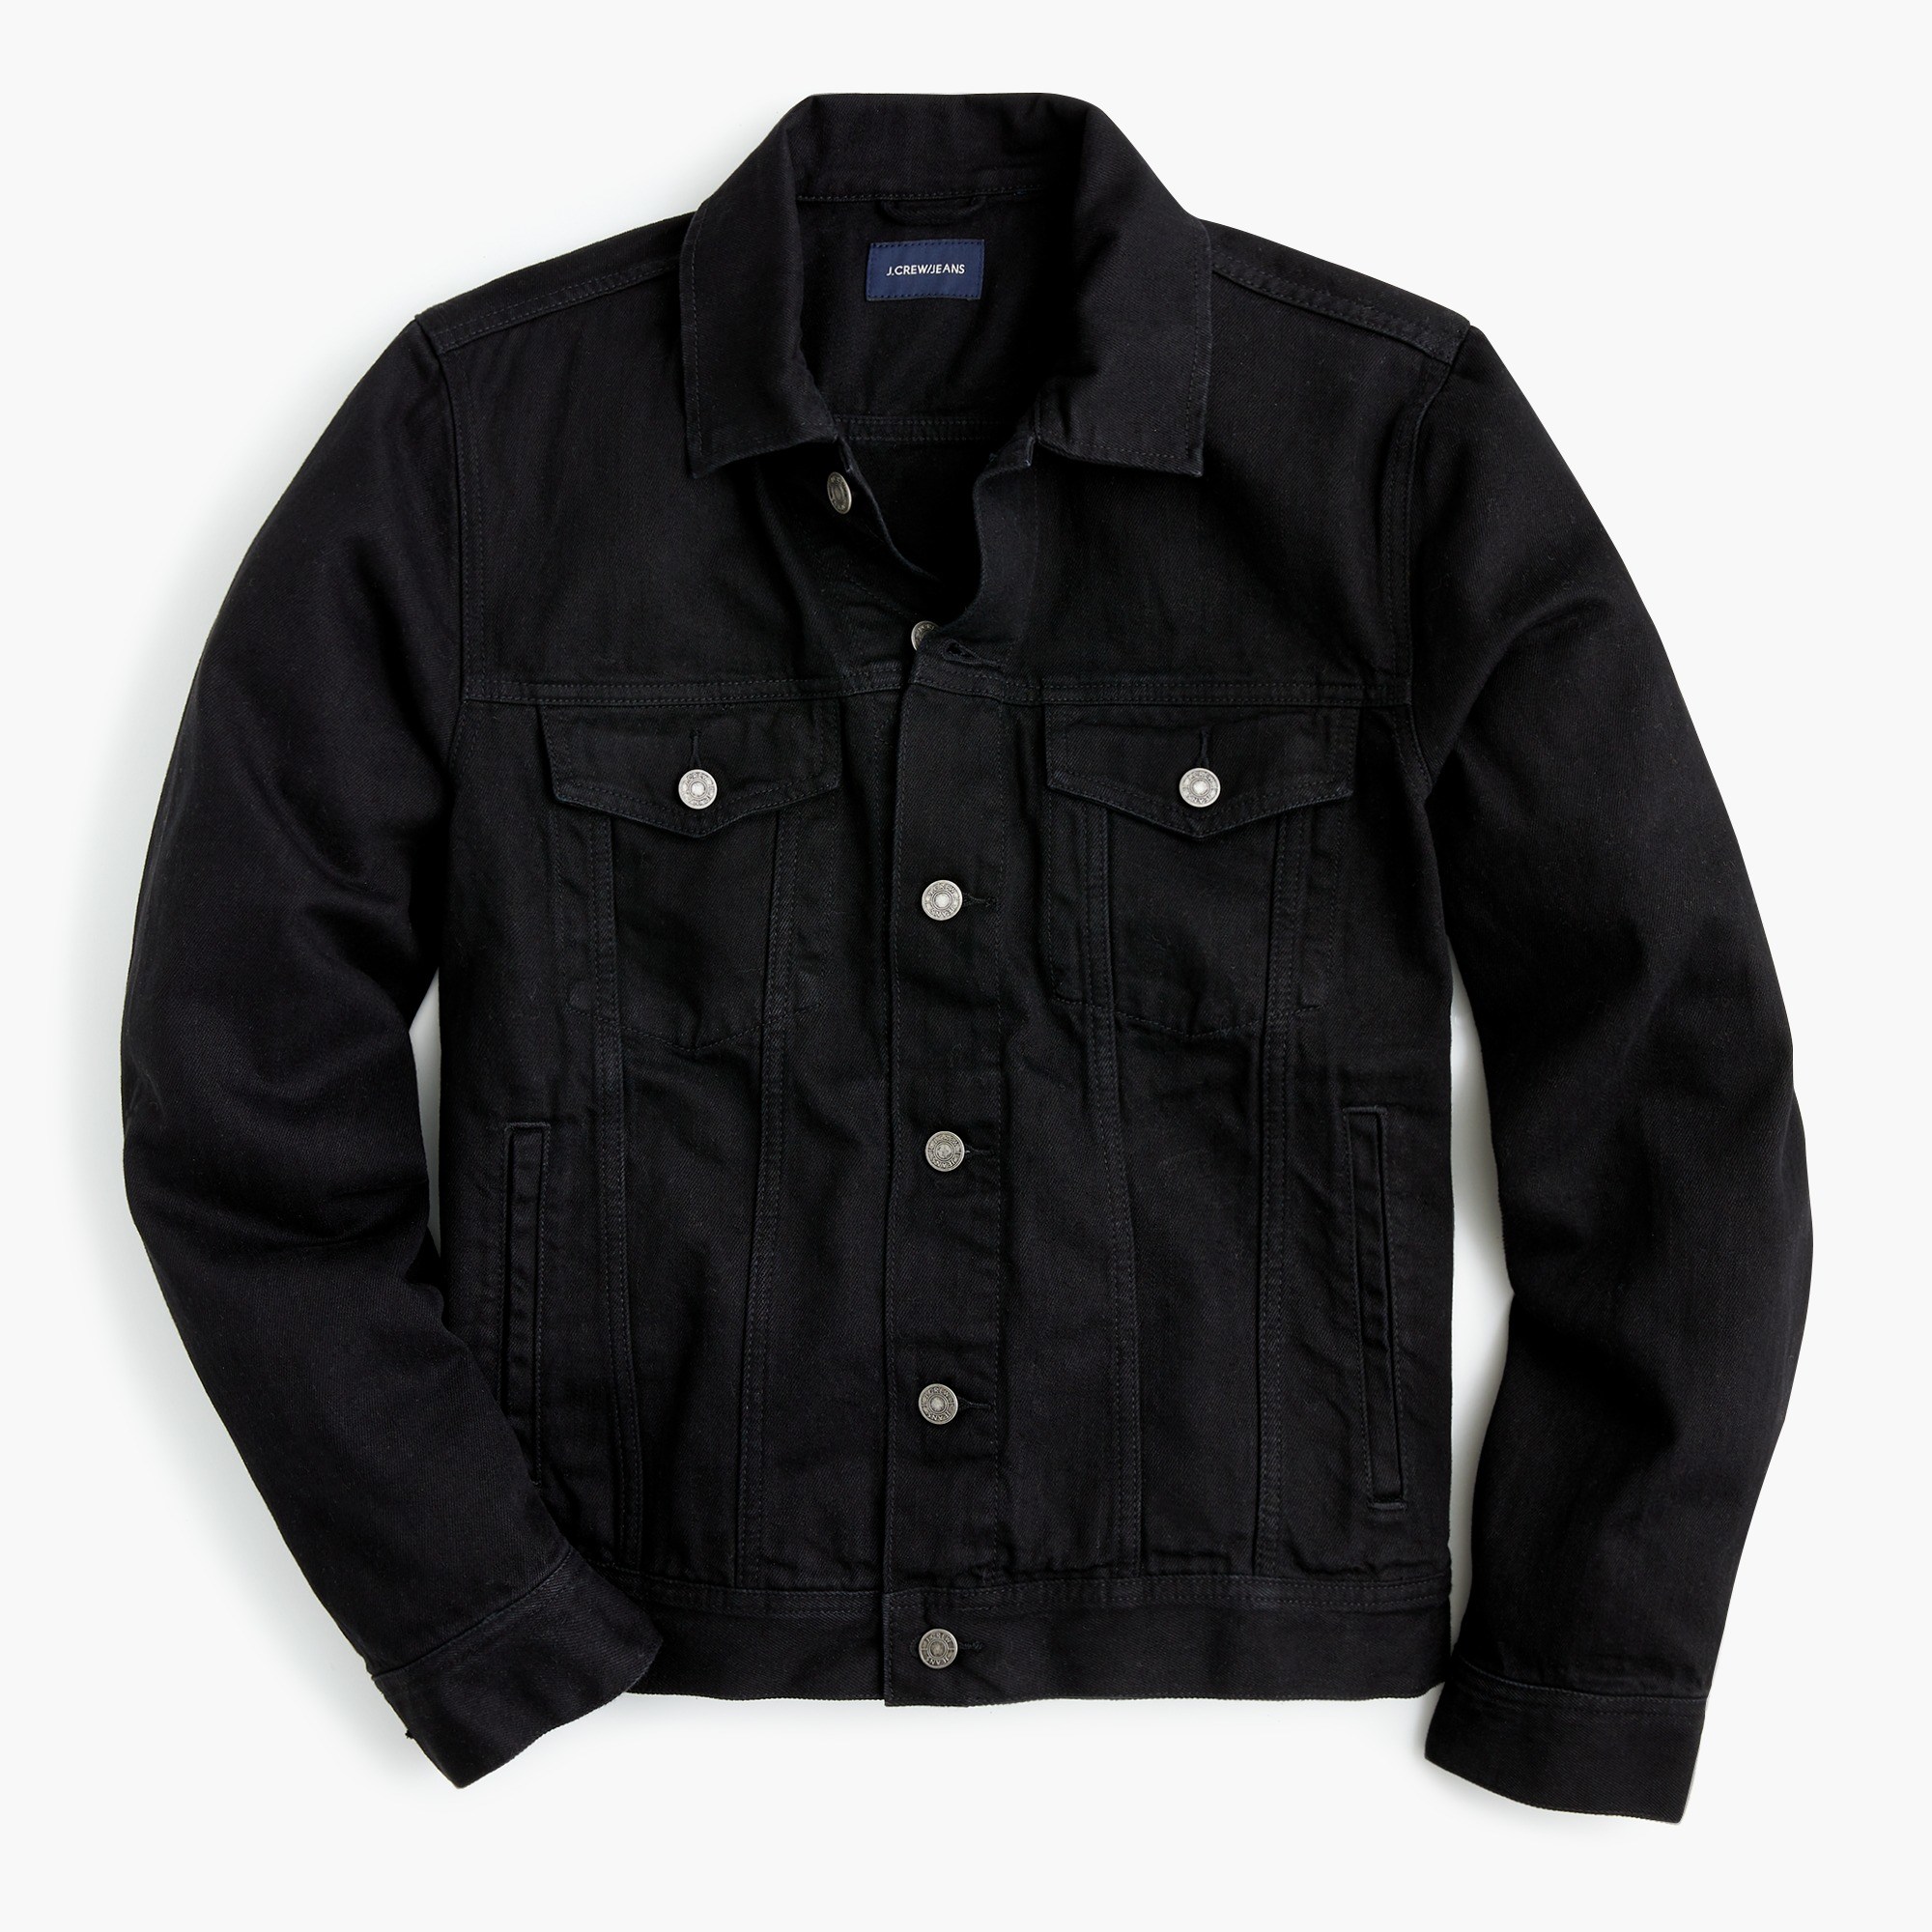 Denim jacket in washed black - Men's Outerwear | J.Crew